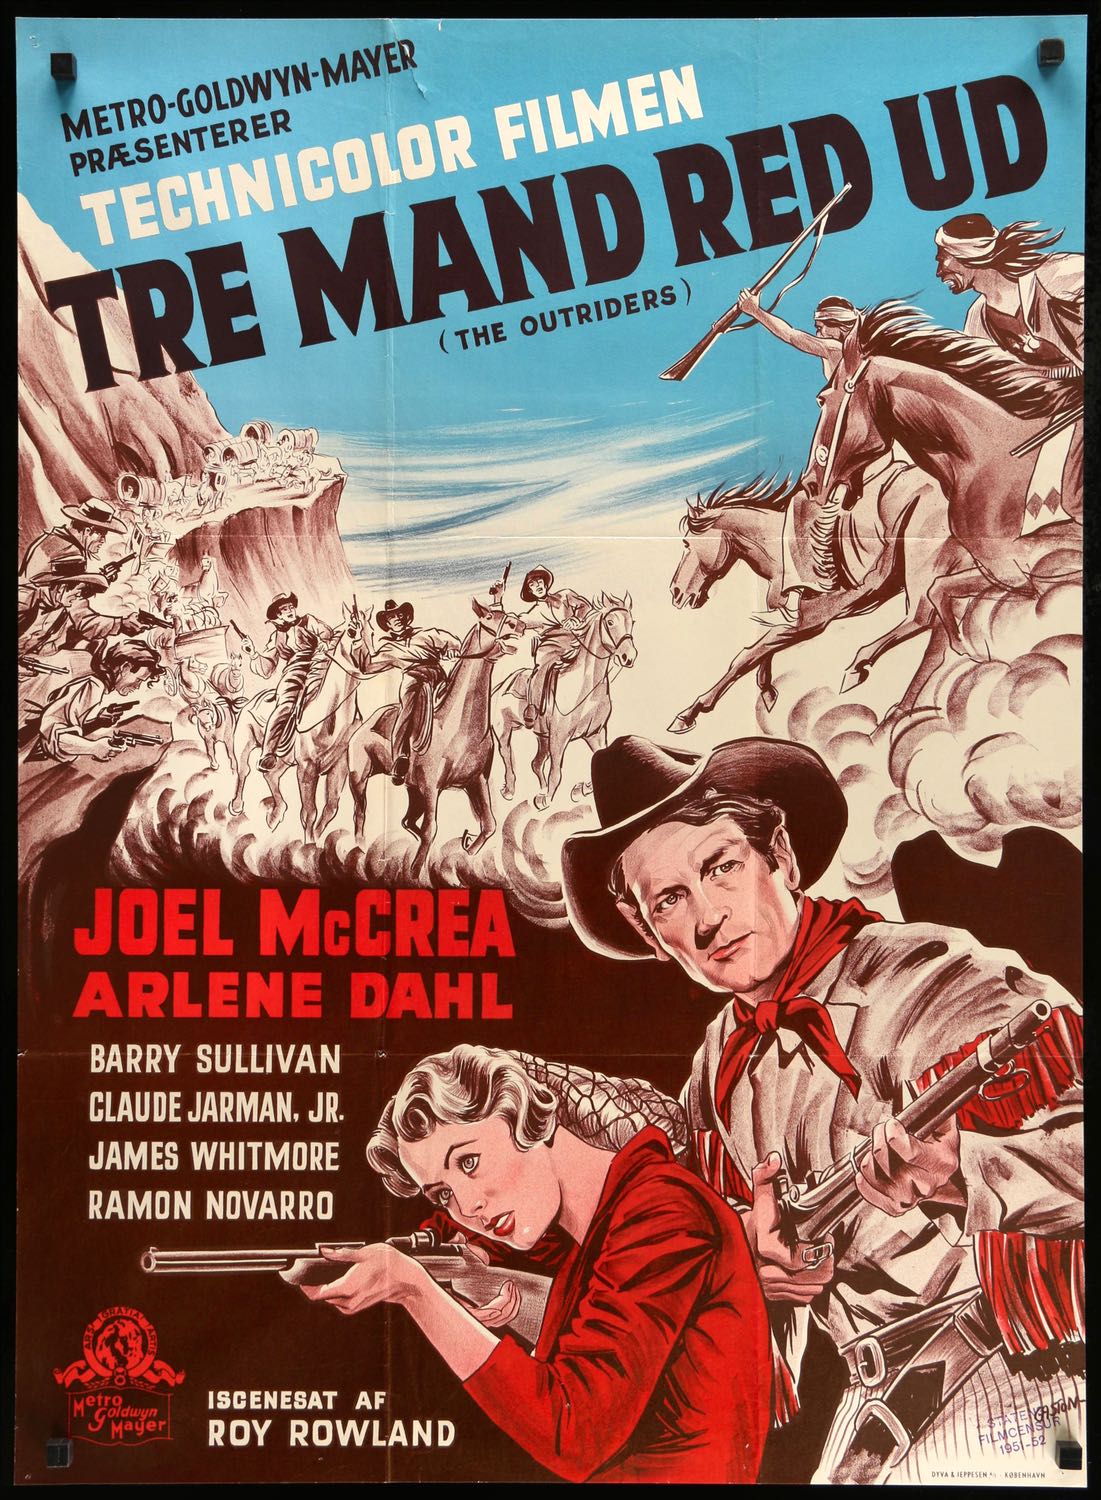 Outriders (1950) original movie poster for sale at Original Film Art